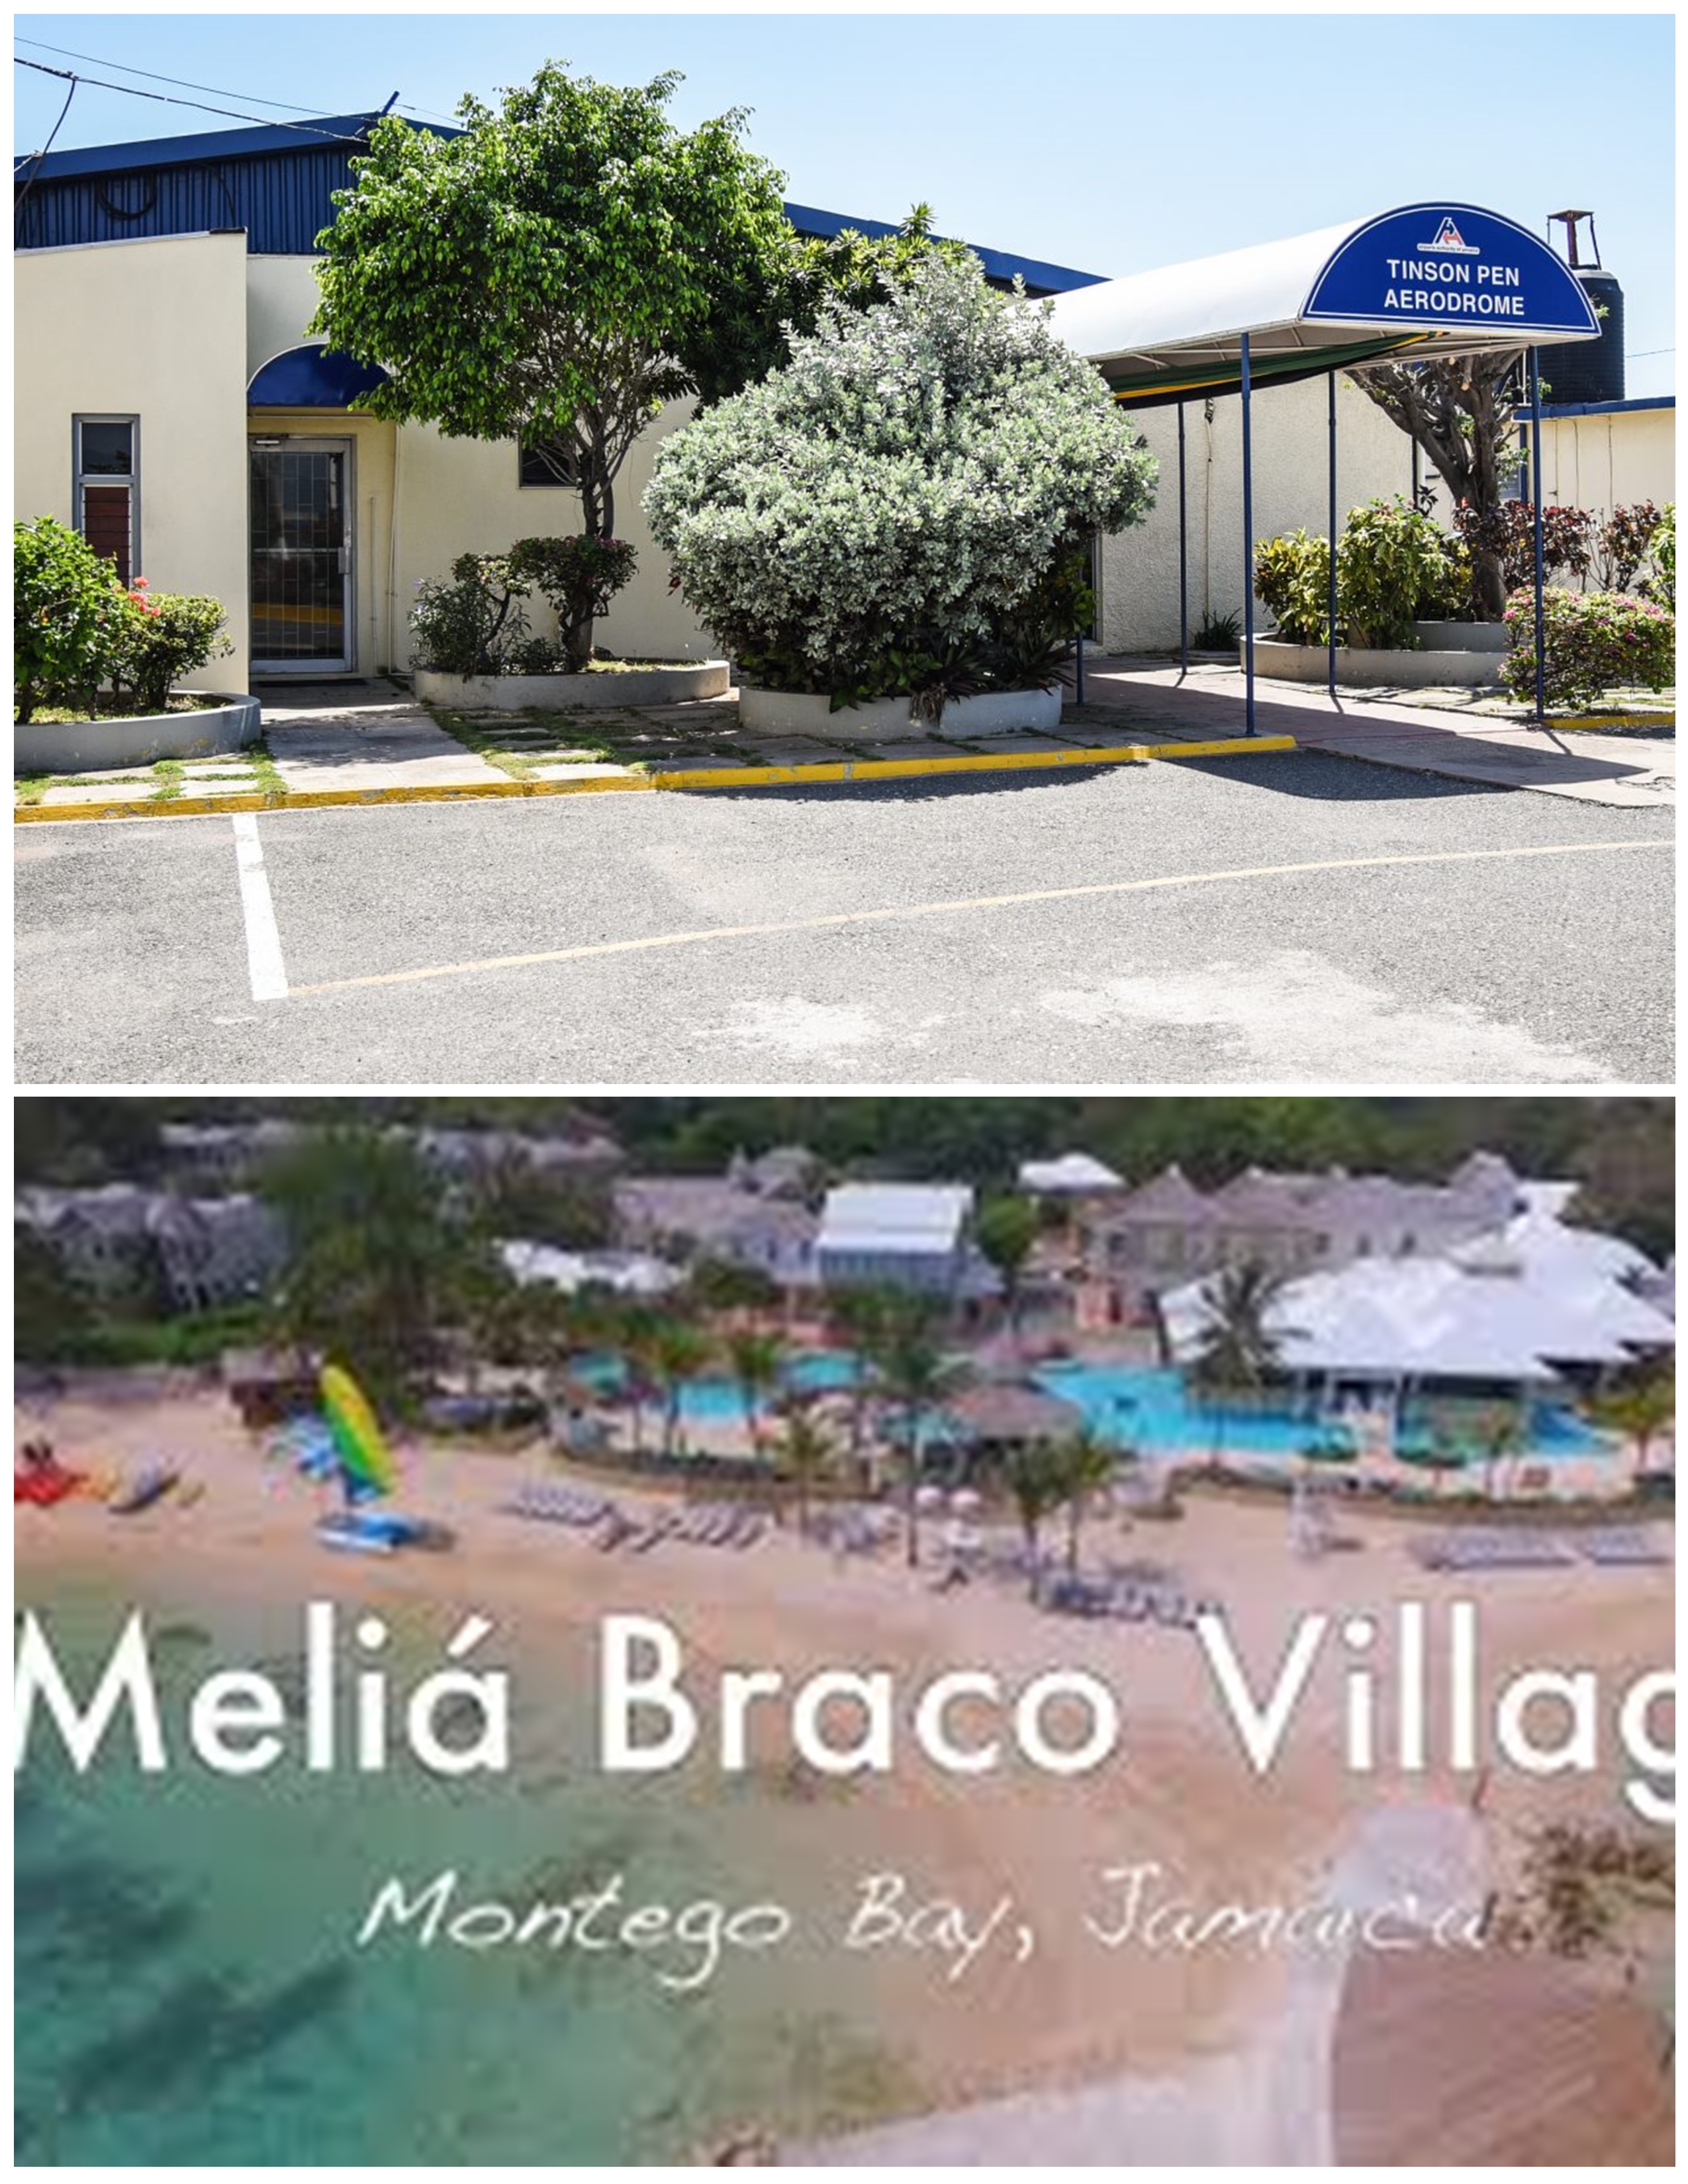 Tinson Pen Aerodrome - Melia Braco Village